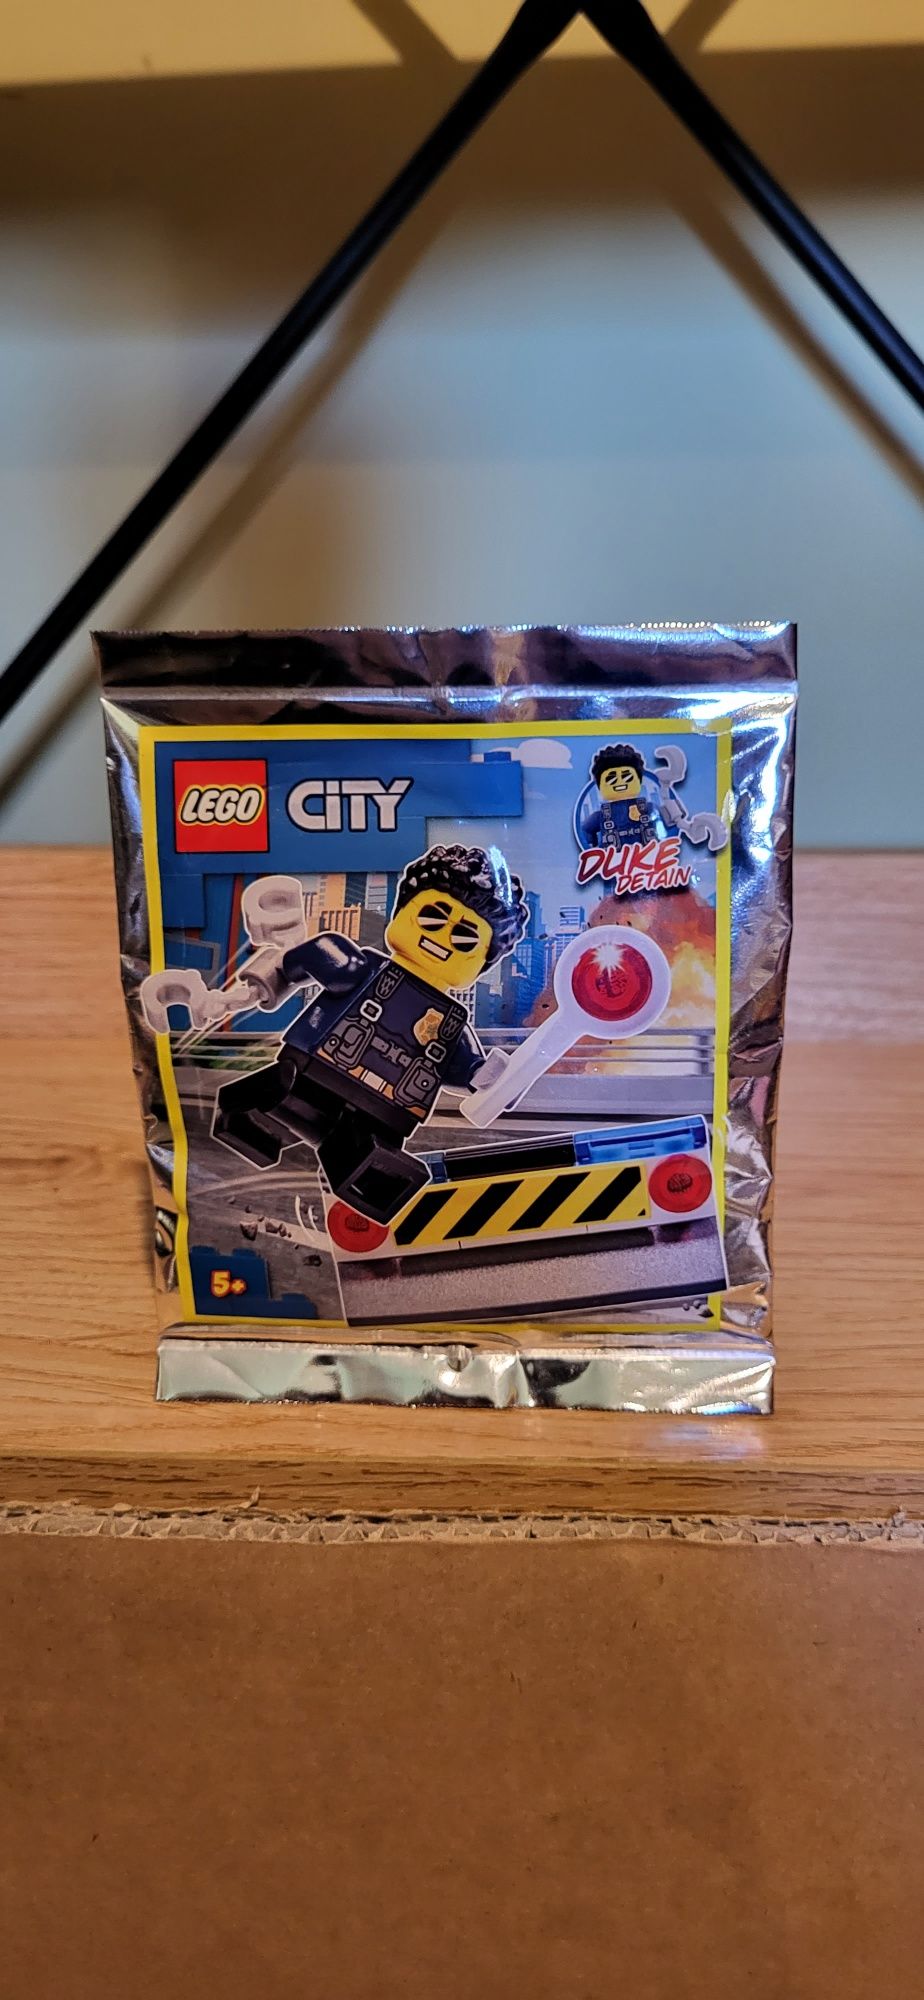 Lego City 952011 Duke Detain saszetka z klockami